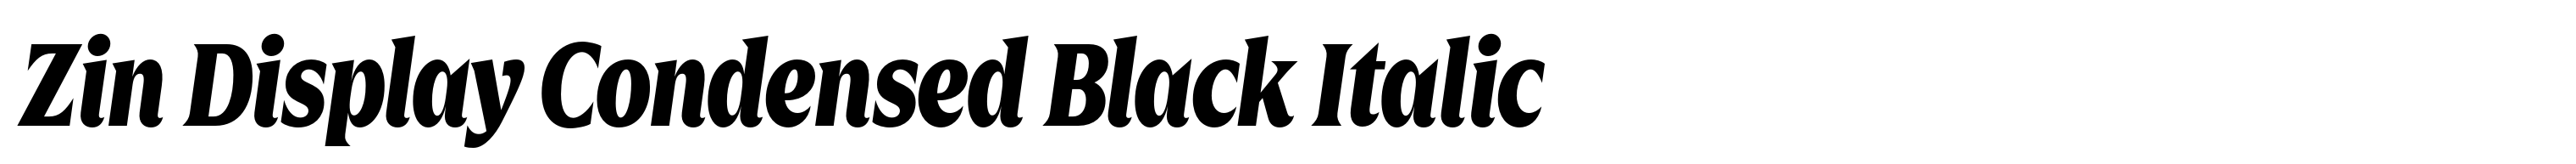 Zin Display Condensed Black Italic